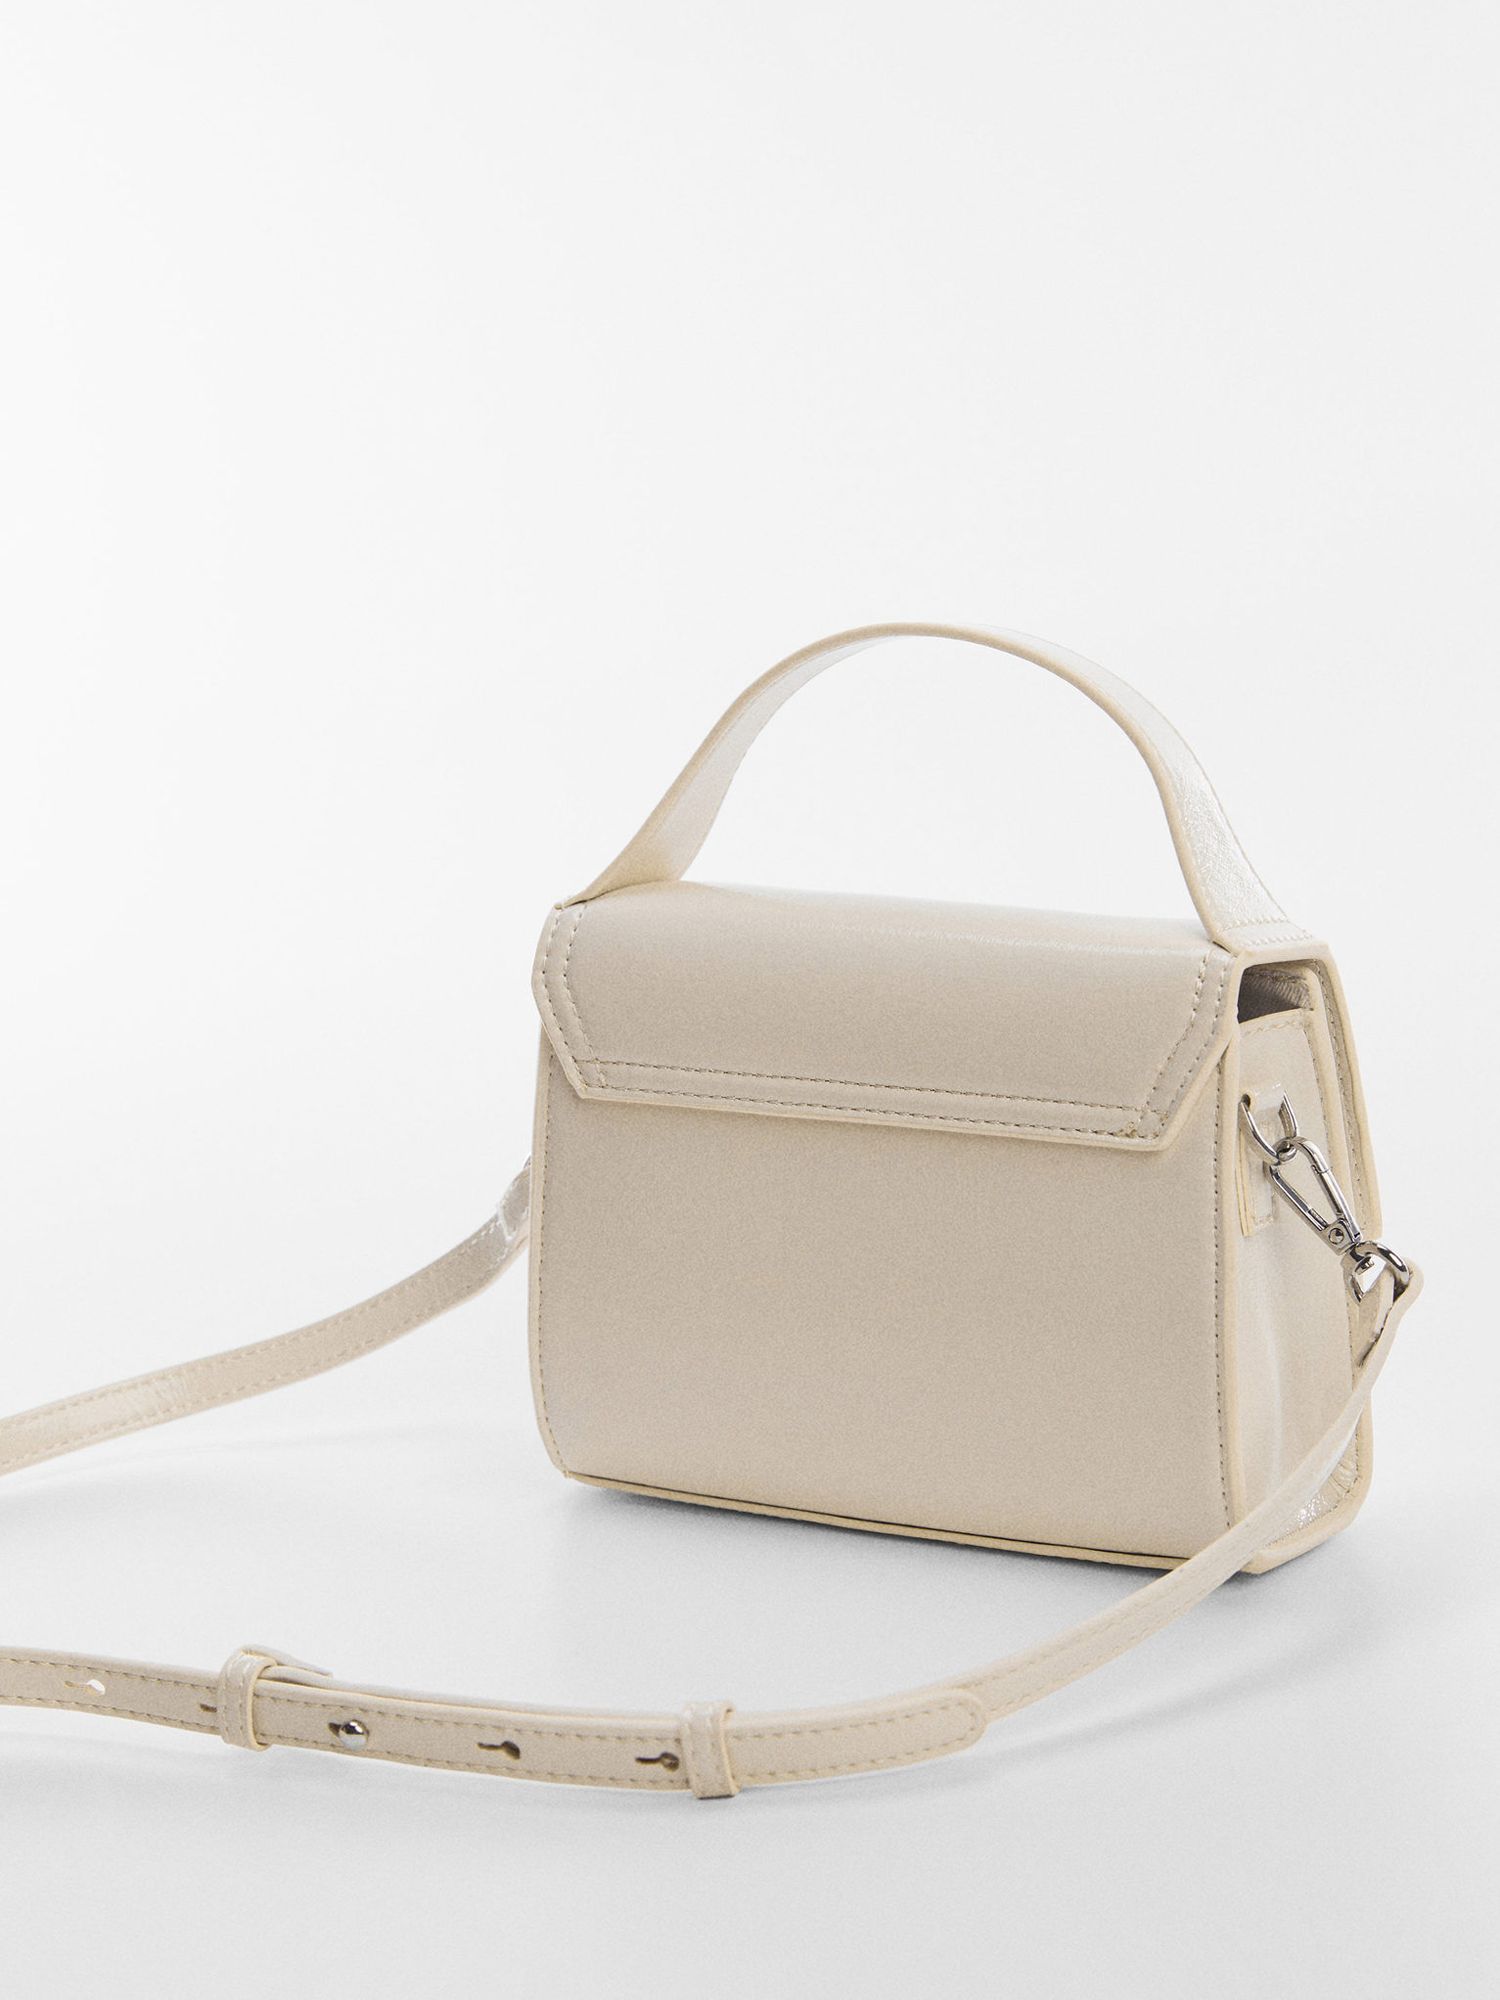 Mango Helena Cross Body Bag, Natural White at John Lewis & Partners